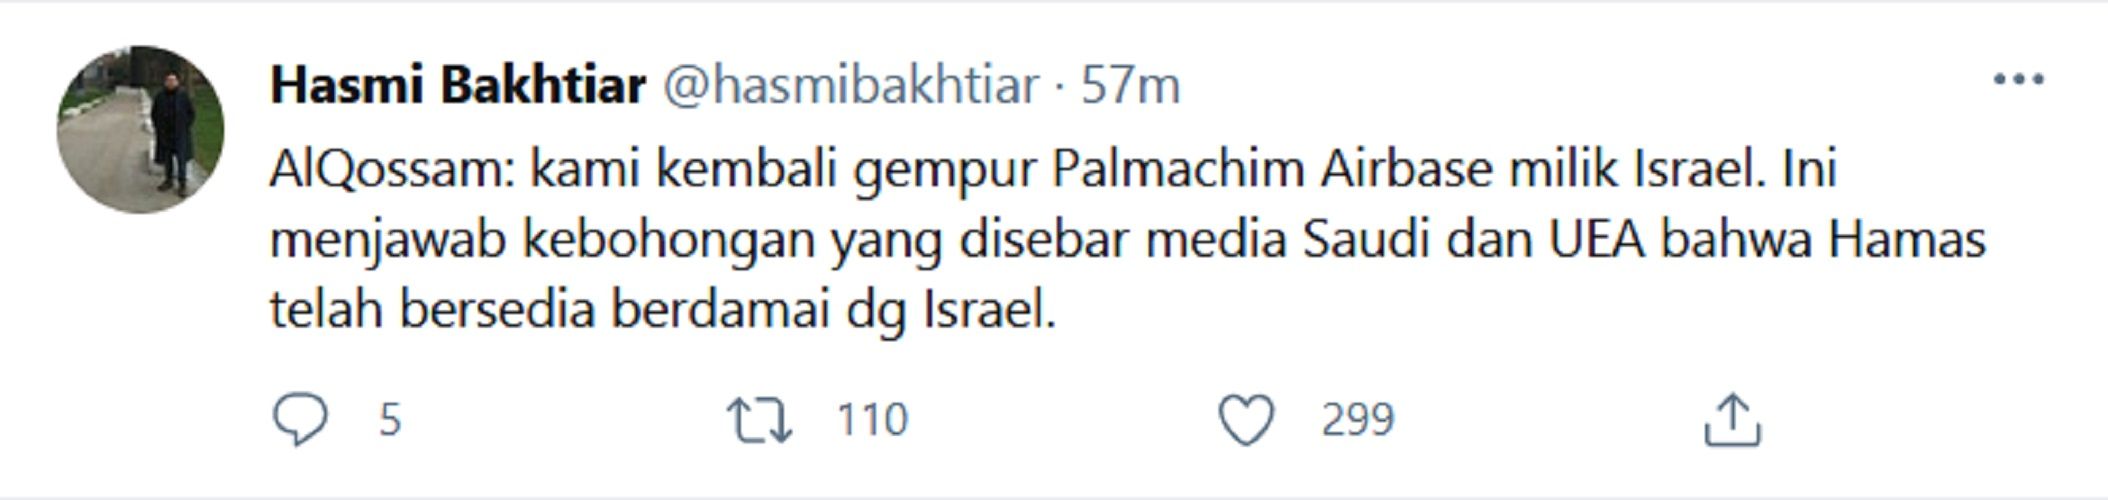 Berita Terupdate: Media Saudi dan UEA Bohong Soal Damai, Hamas Gempur Palmachim Airbase Israel